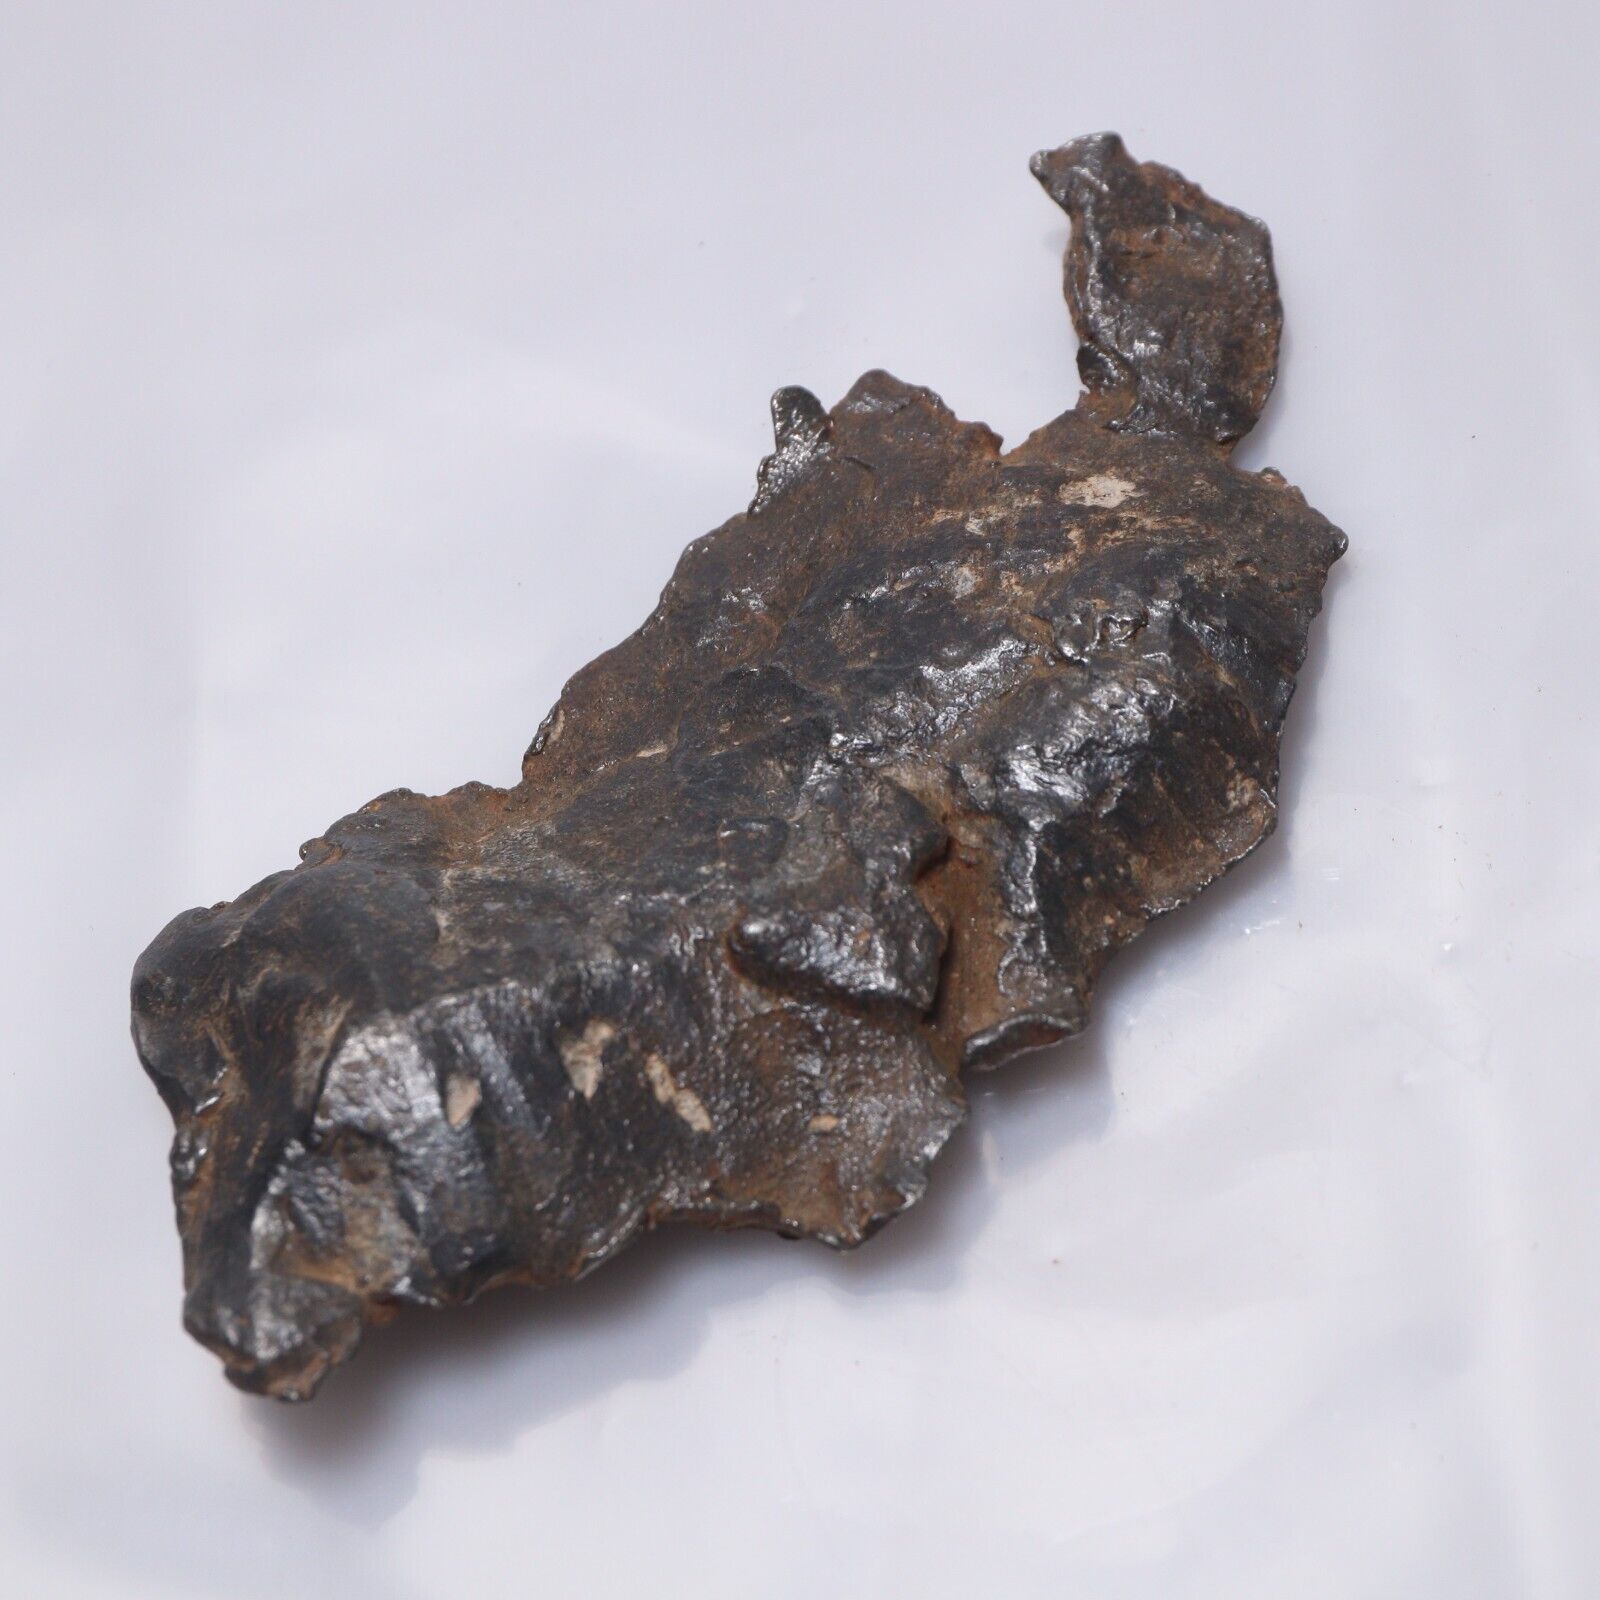 100g Gebel Kamil Meteorite,Egypt,Iron Meteorite,collection,Astronomy Gift B2915